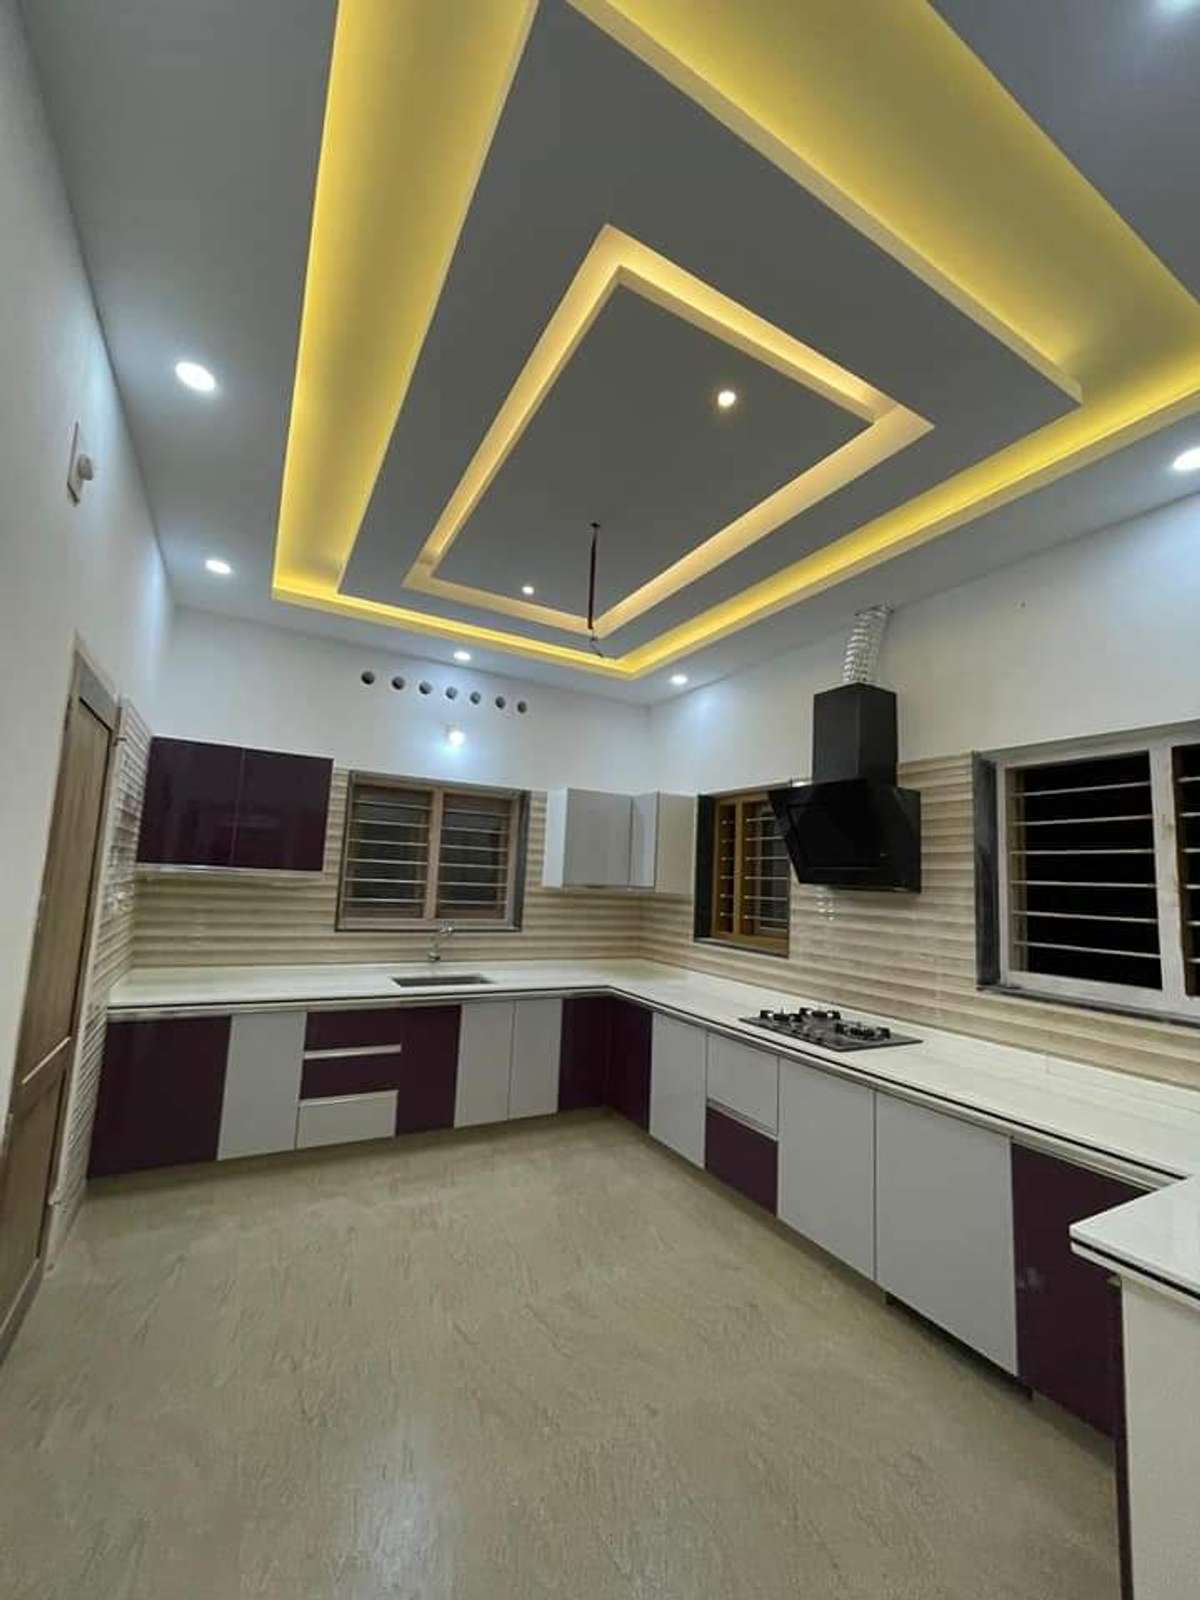 Ceiling, Lighting, Storage, Kitchen, Flooring Designs by Carpenter ЁЯЩП рдлреЙрд▓реЛ рдХрд░реЛ рджрд┐рд▓реНрд▓реА рдХрд╛рд░рдкреЗрдВрдЯрд░ рдХреЛ, Delhi | Kolo